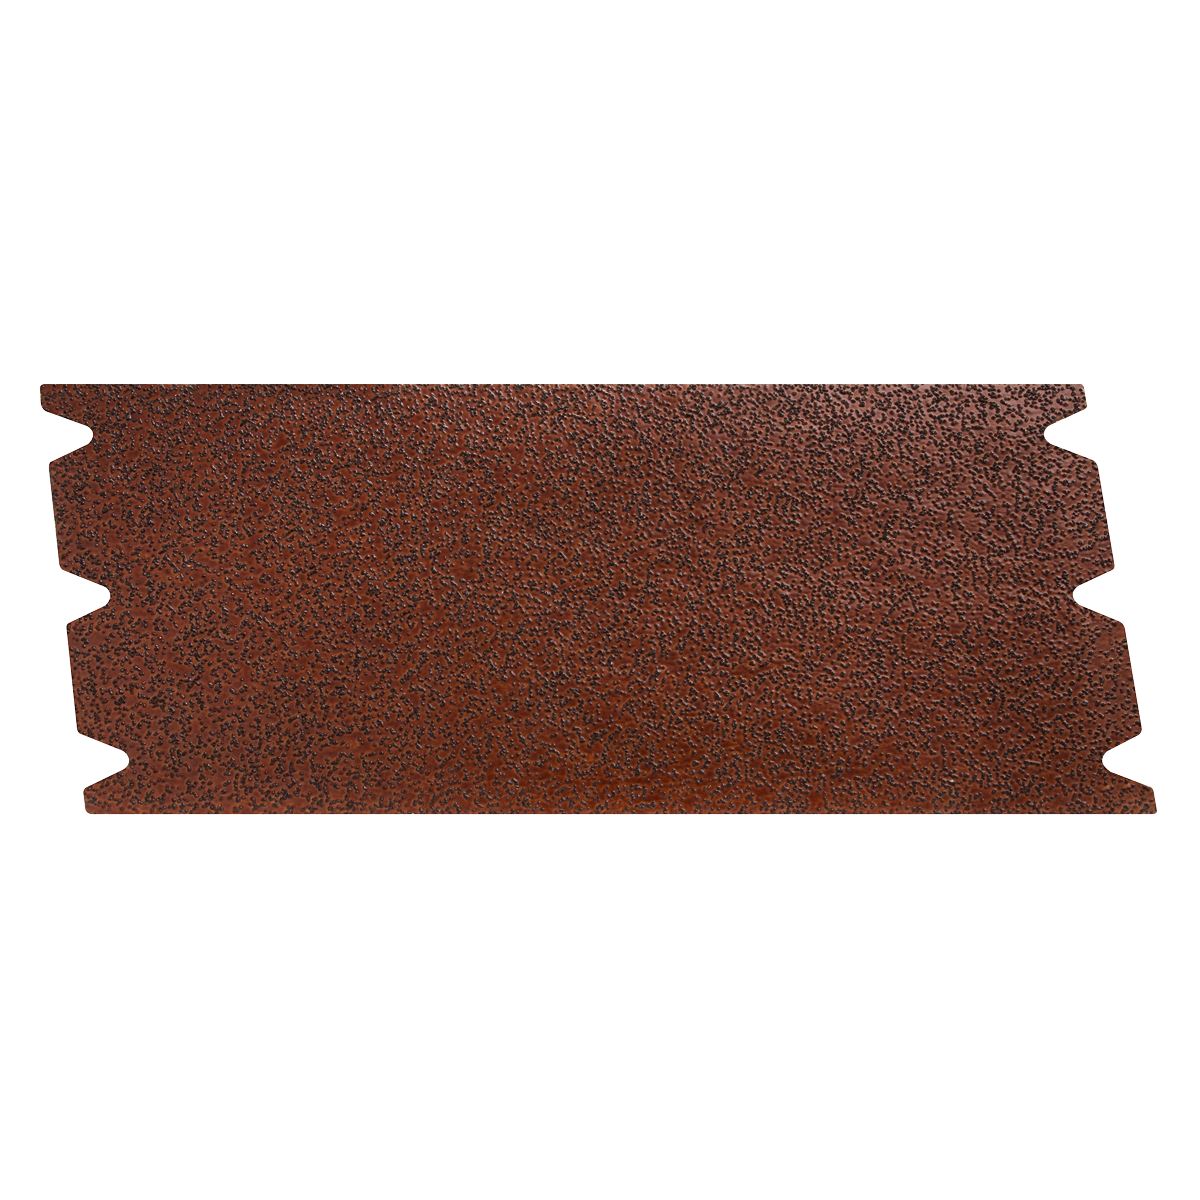 Worksafe by Sealey Floor Sanding Sheet 203 x 495mm 24Grit Open Coat - Pack of 25